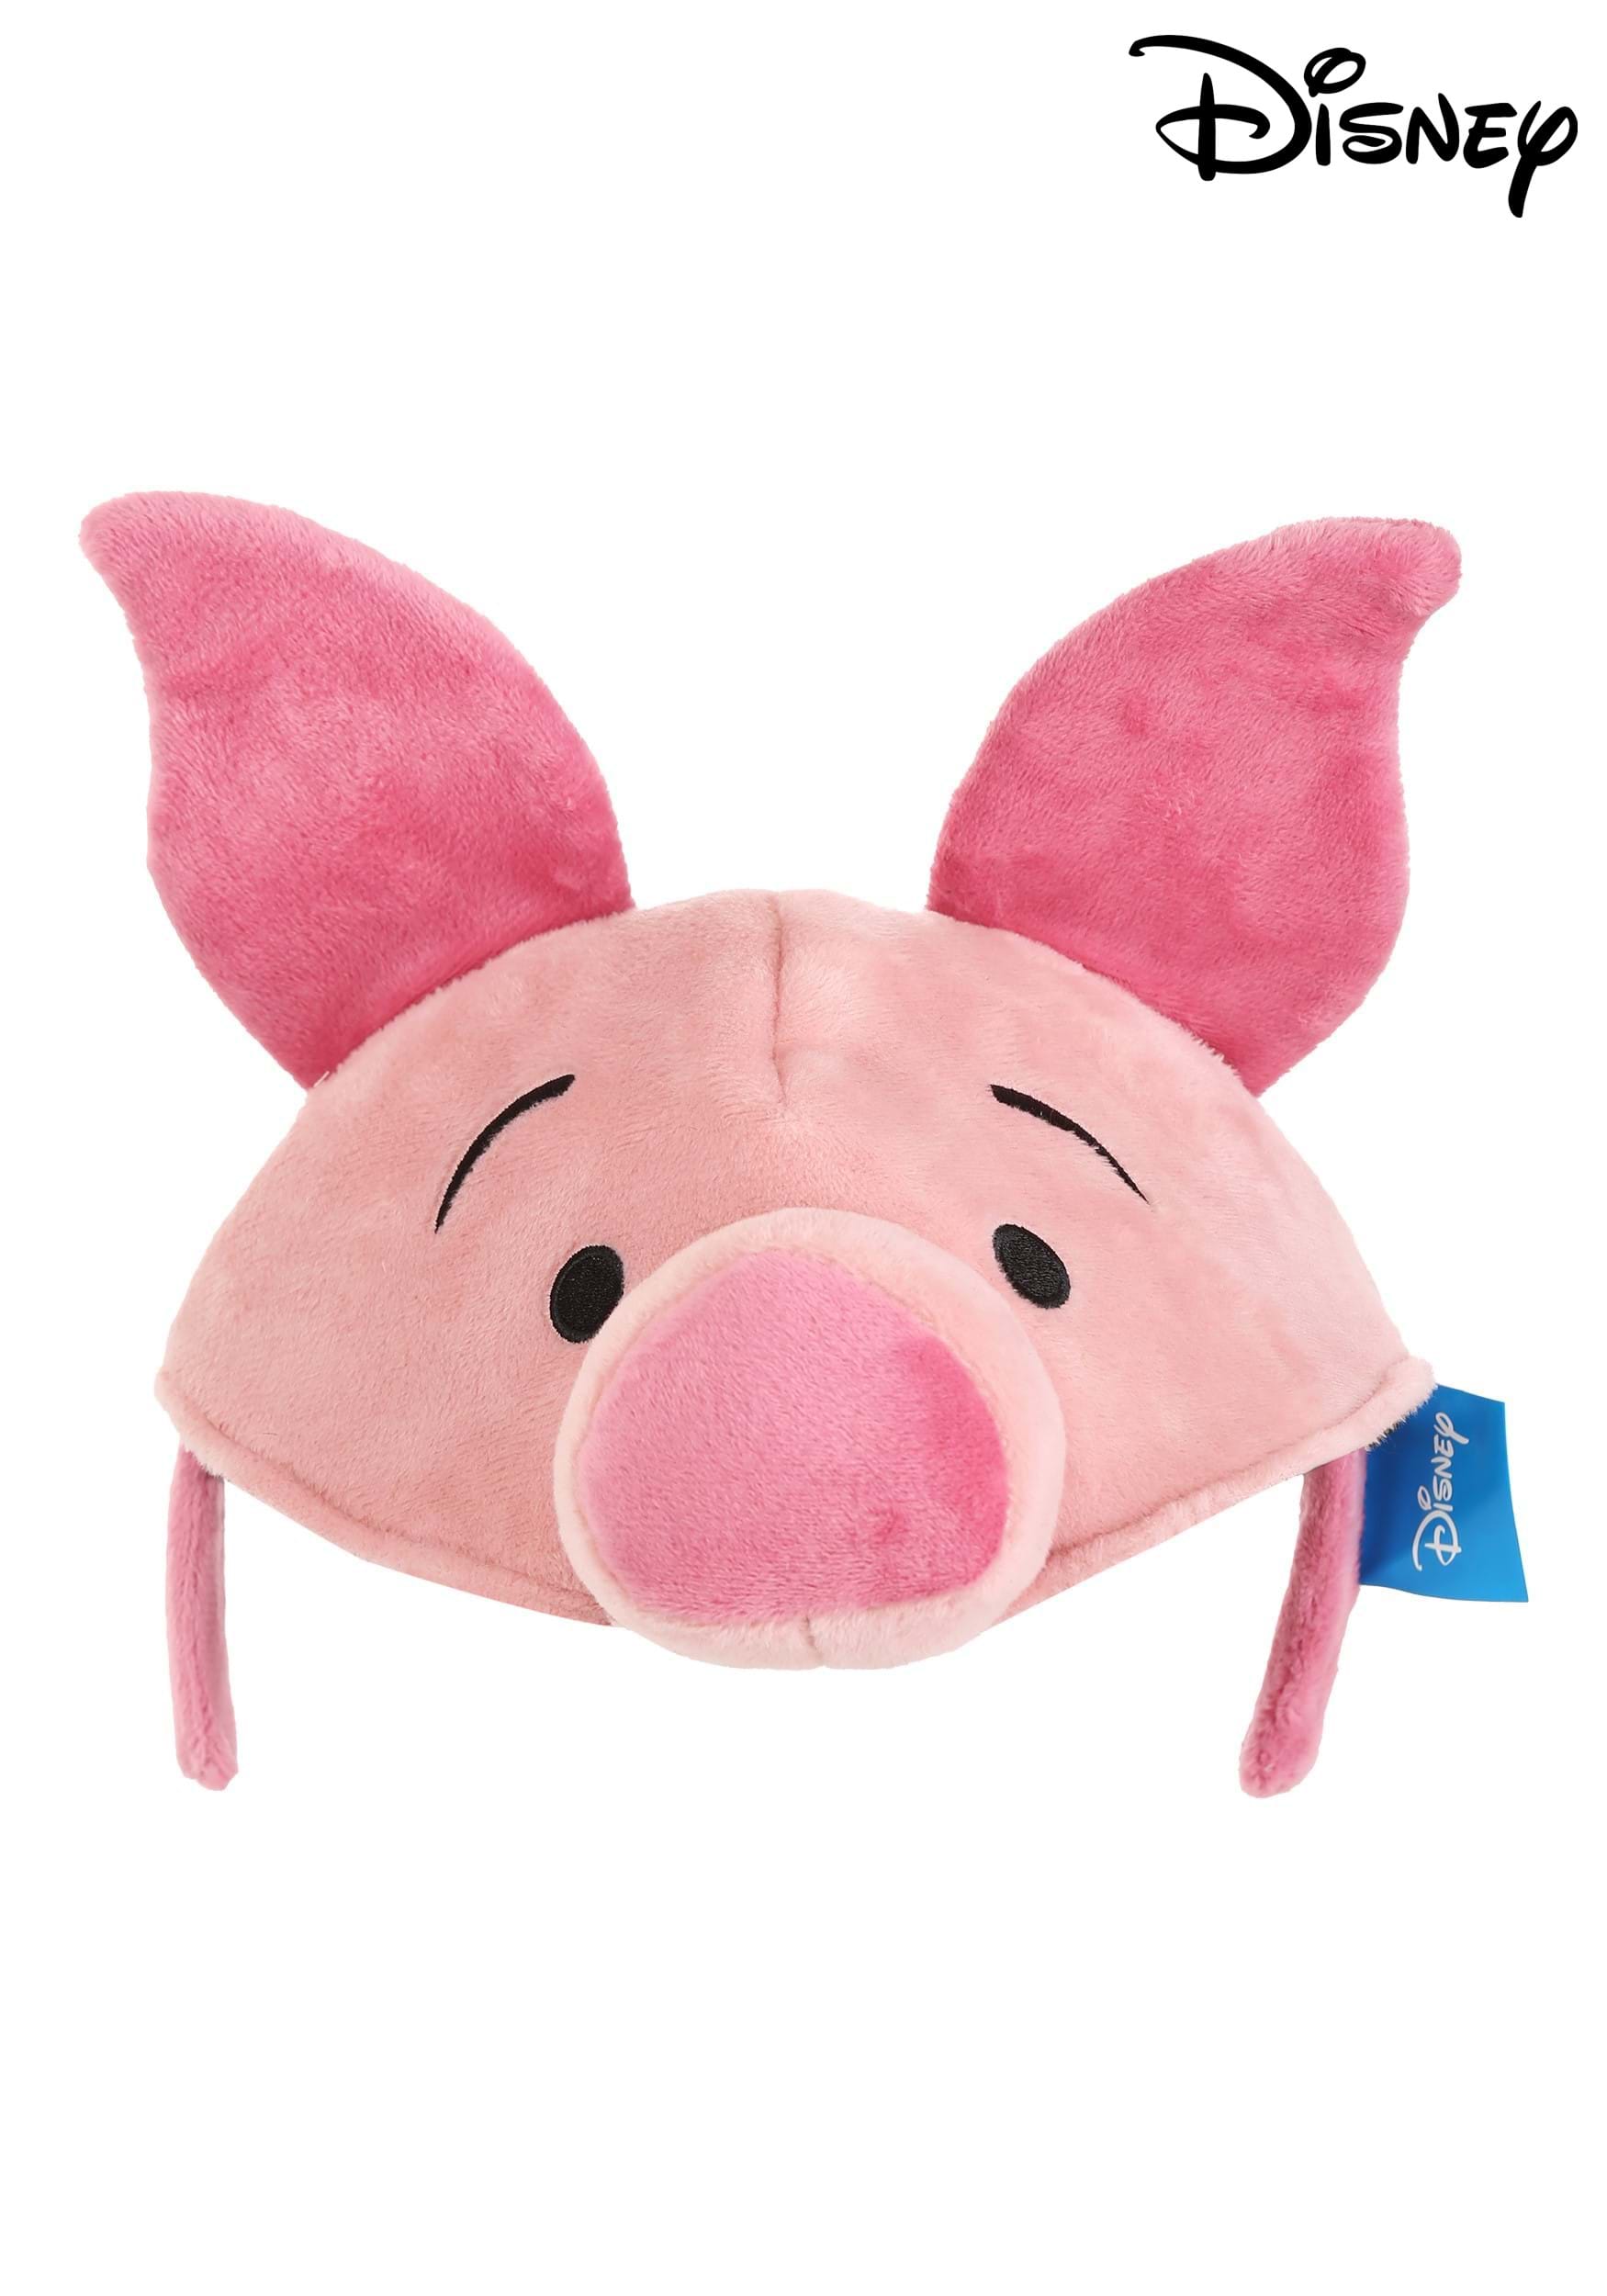 Plush Headband Of Piglet From Winnie The Pooh